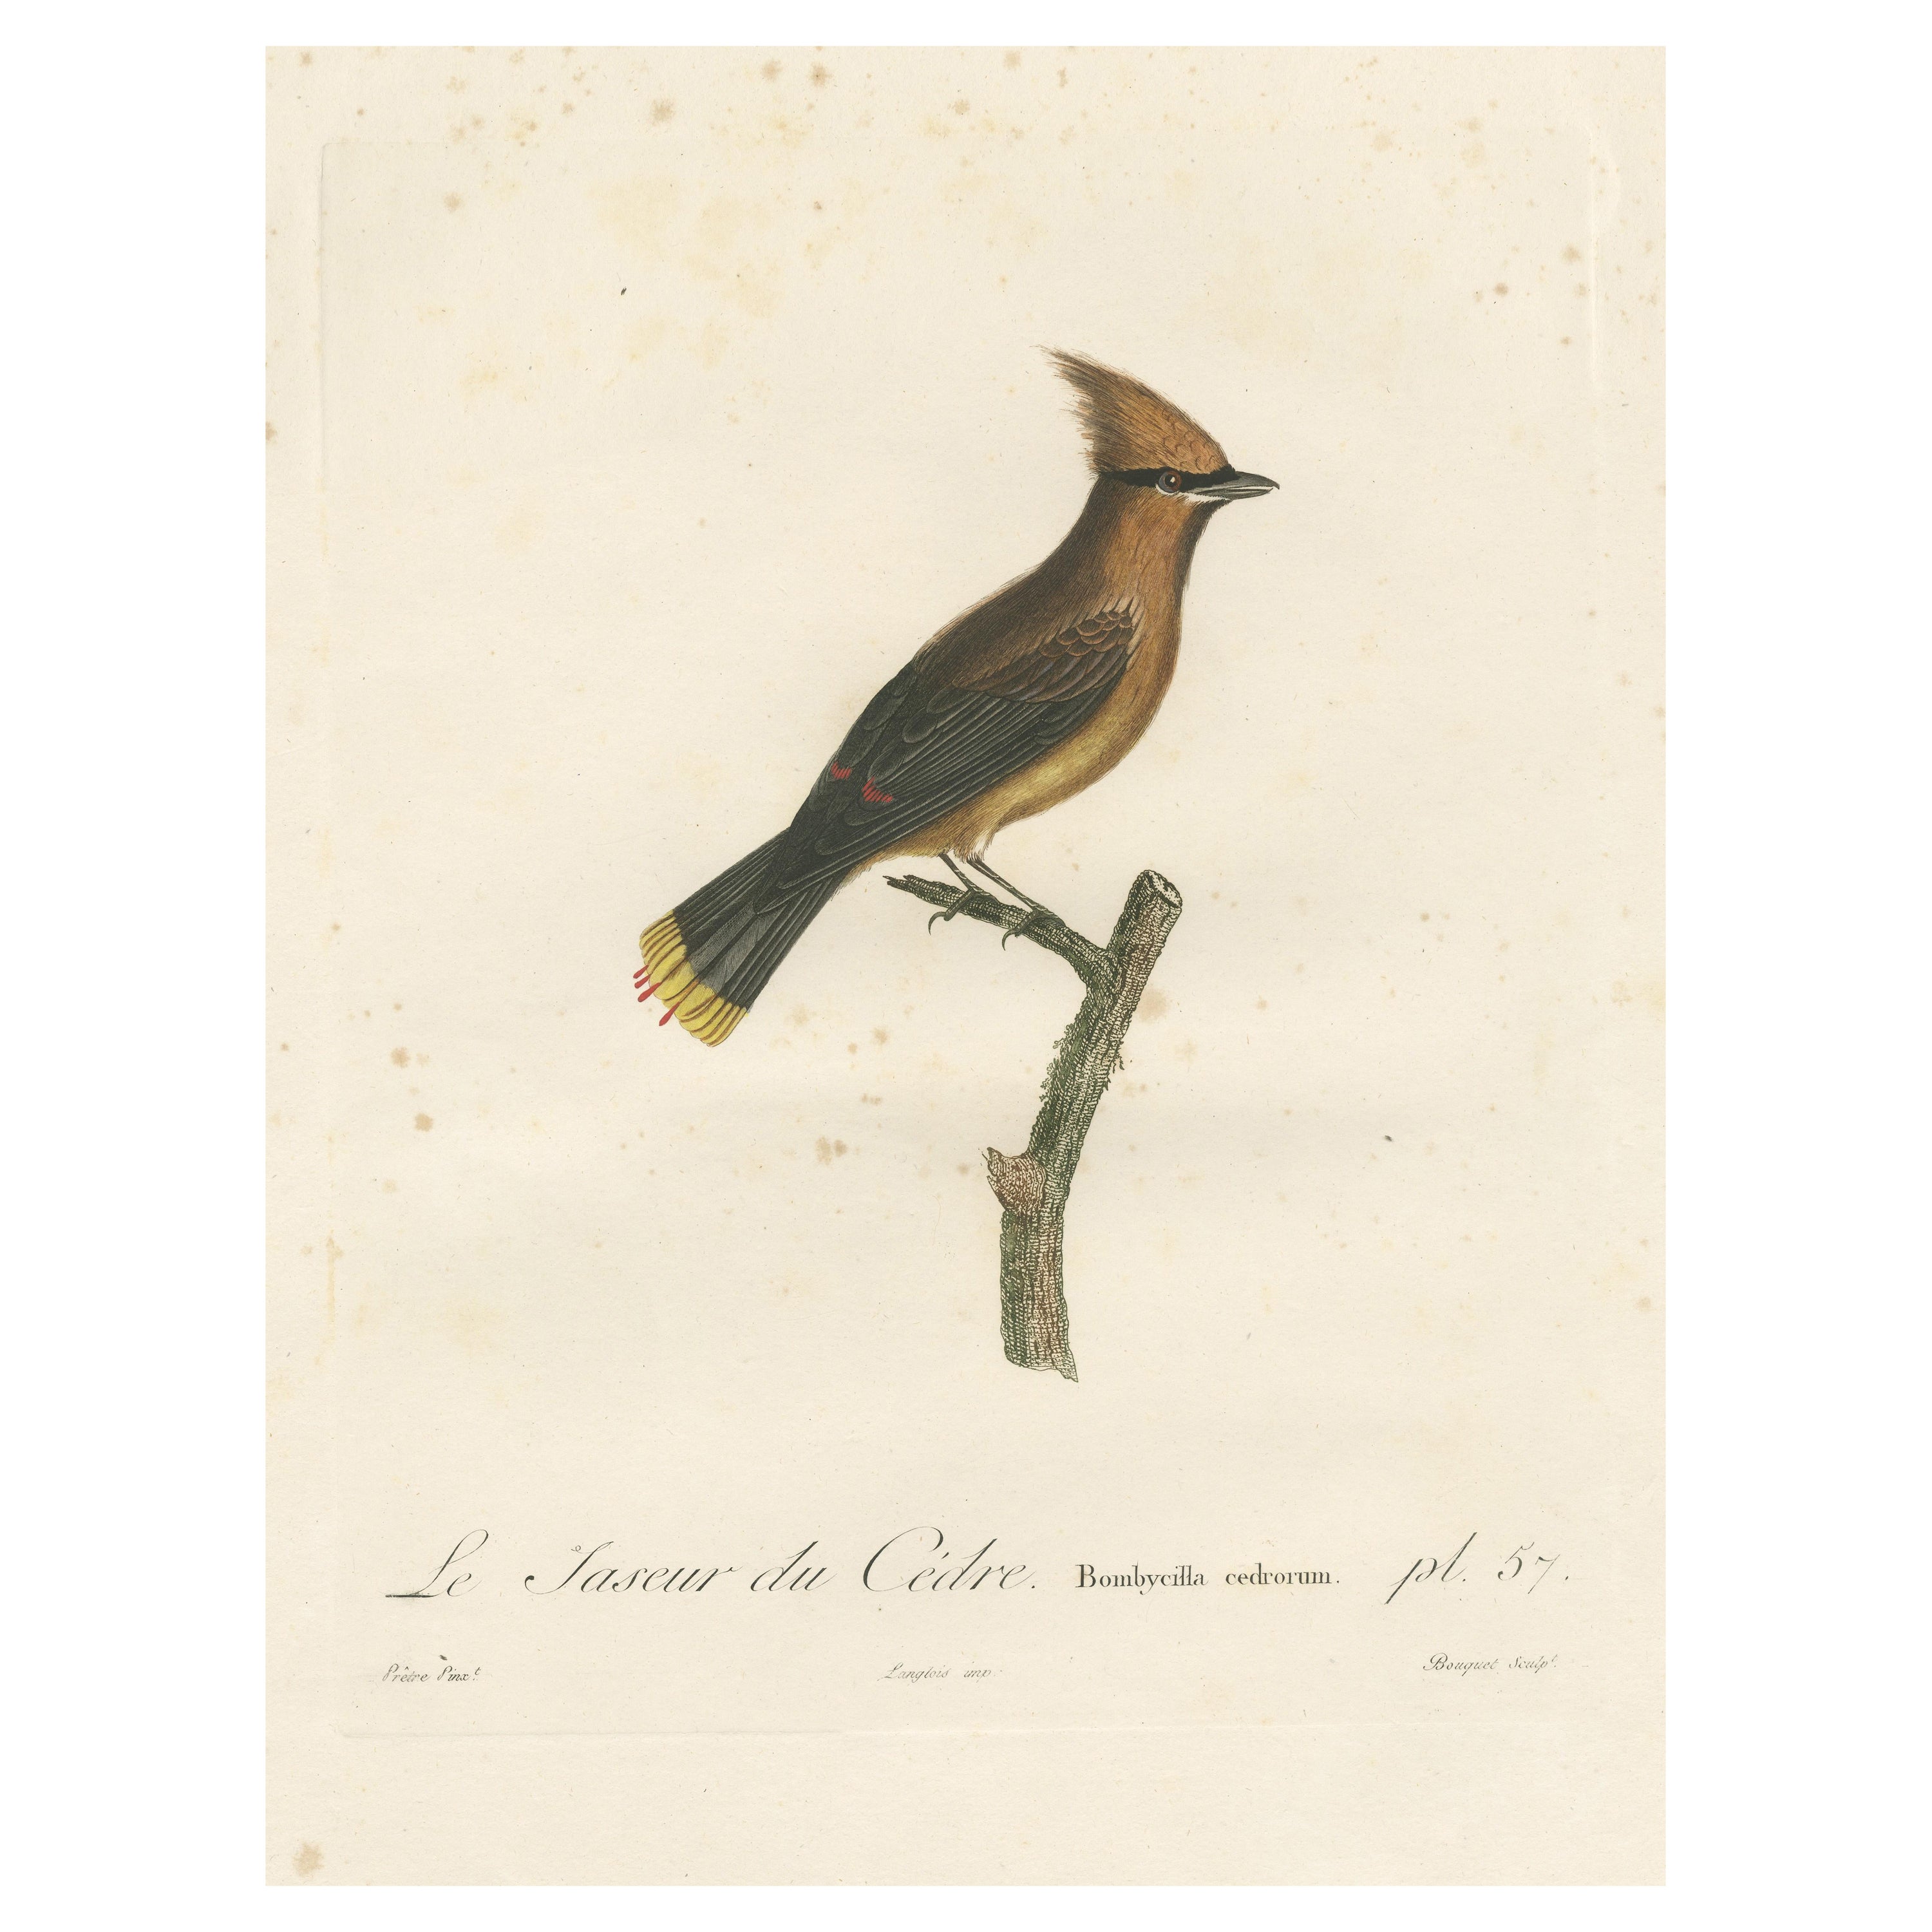 1807 Cedar Waxwing Print - Original Handcolored Bird Illustration by Vieillot For Sale